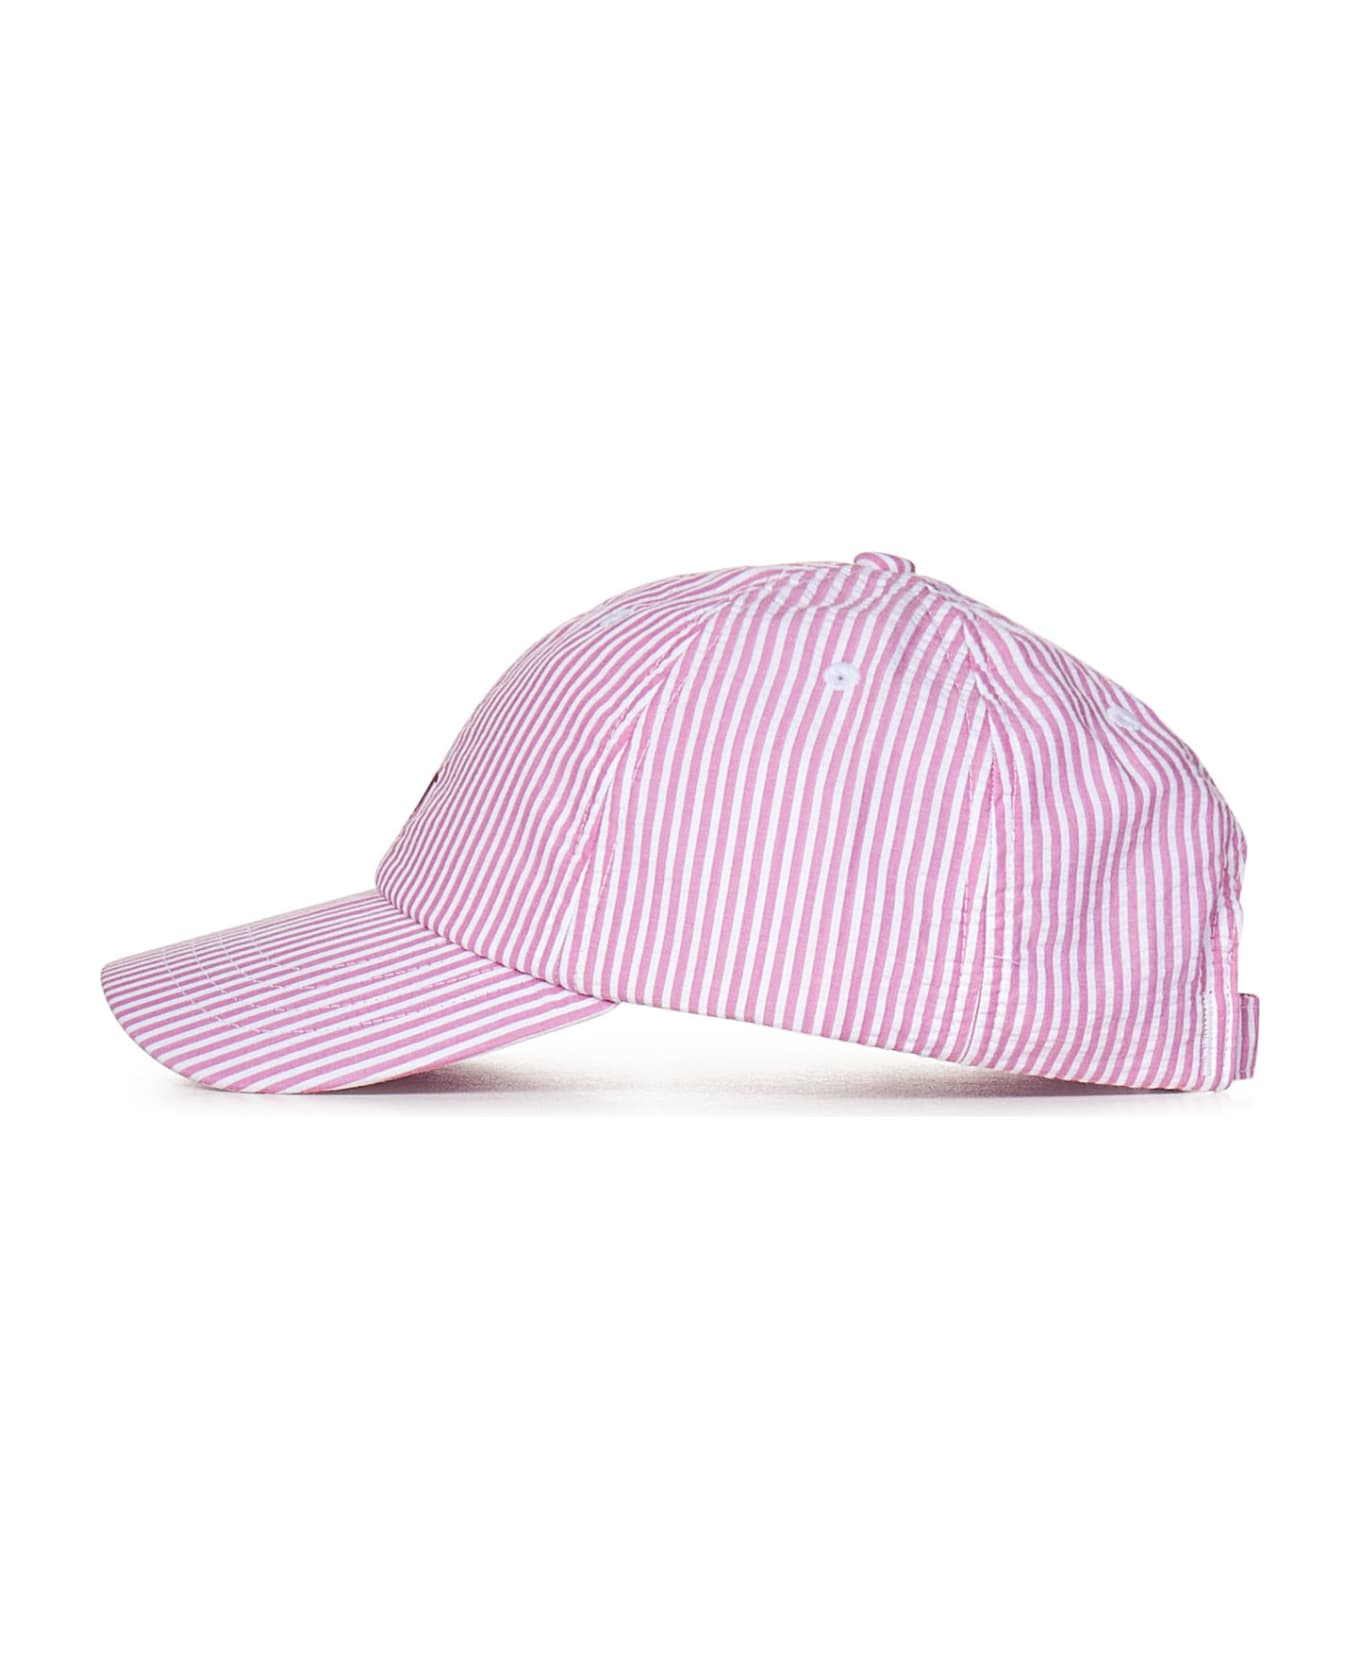 Polo Ralph Lauren Hat - Pink